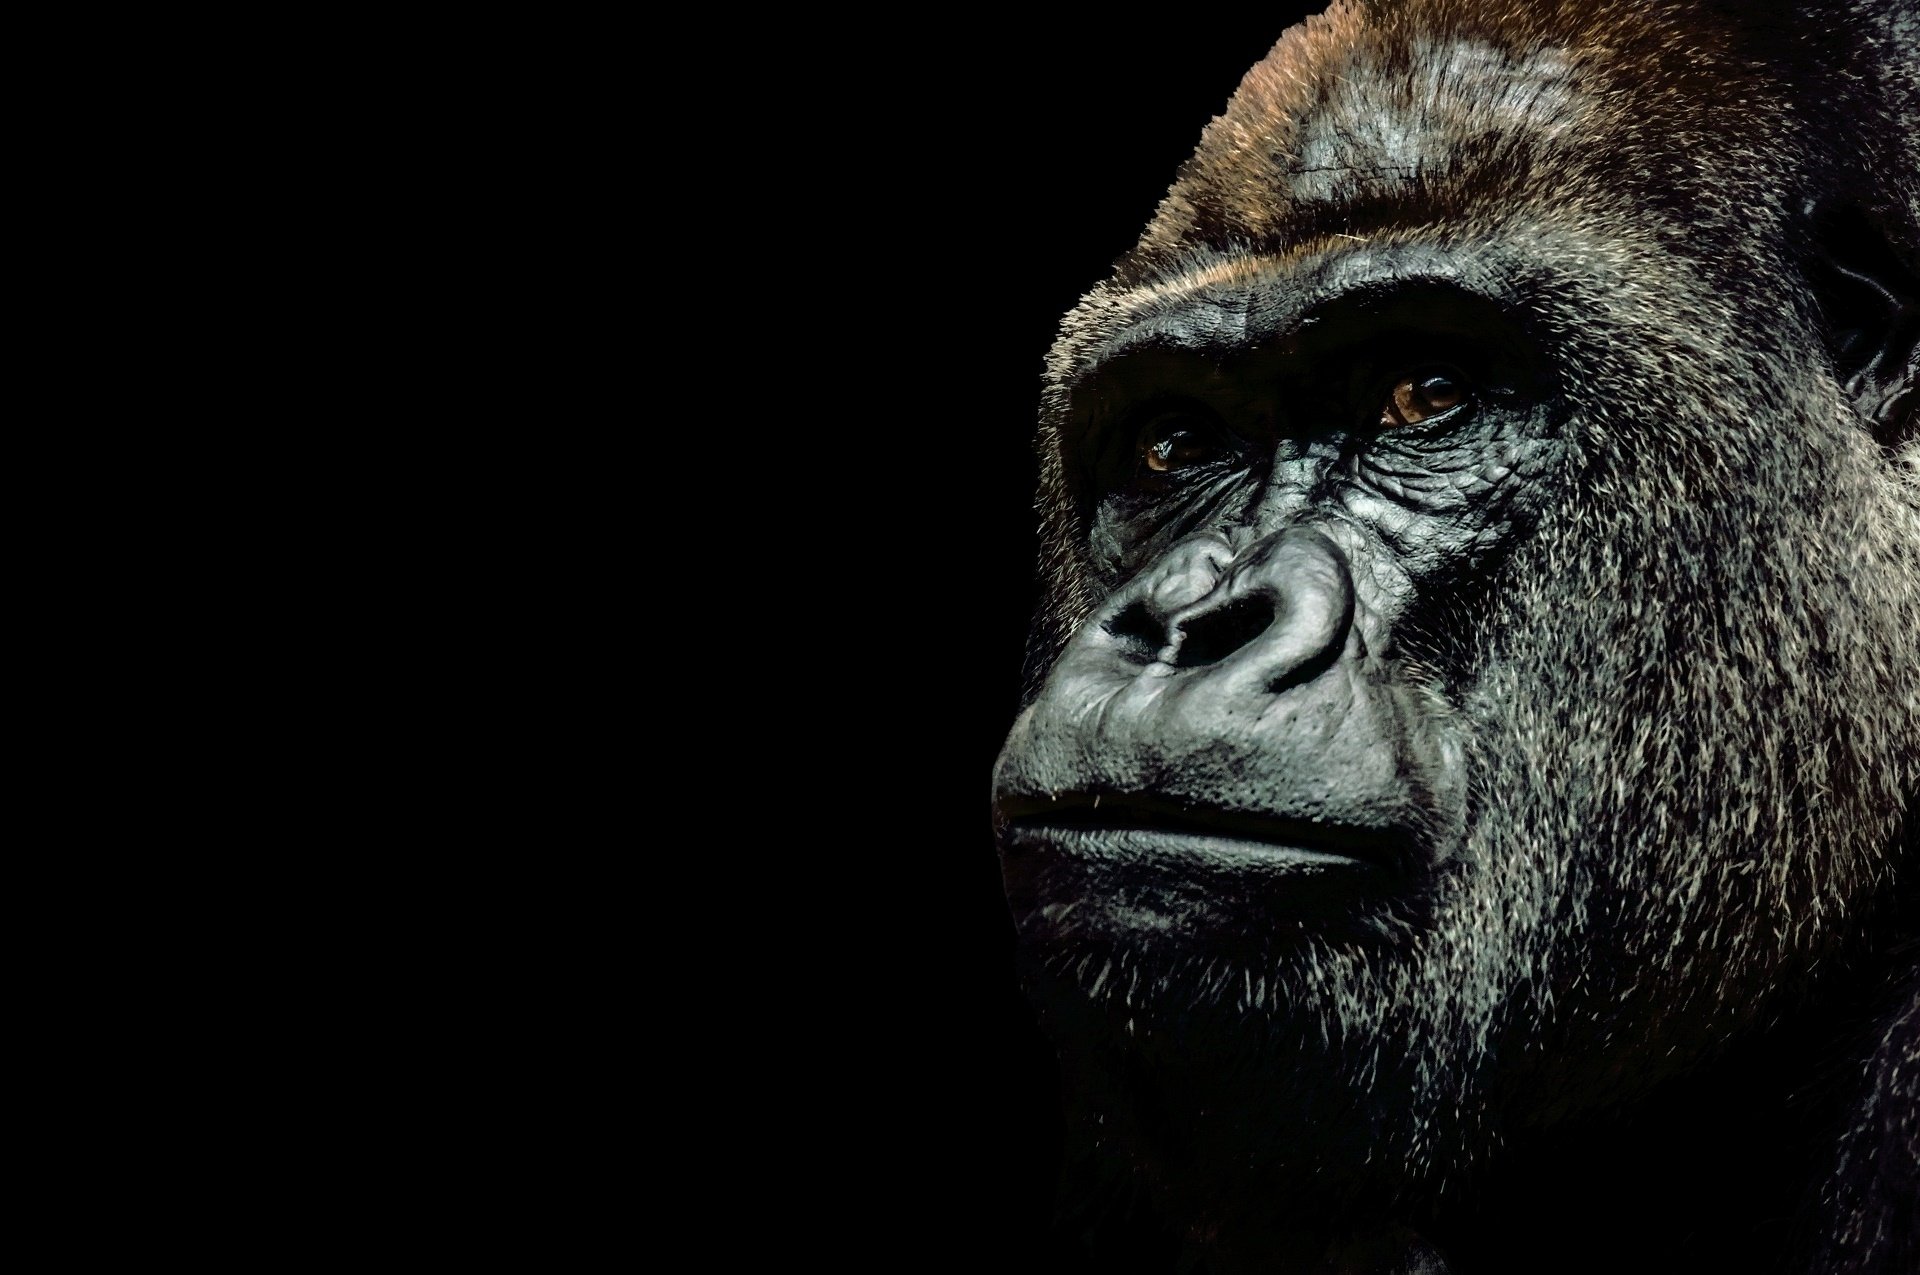 Best Of Great Zoom Backgrounds Gorilla Wallpaper Images